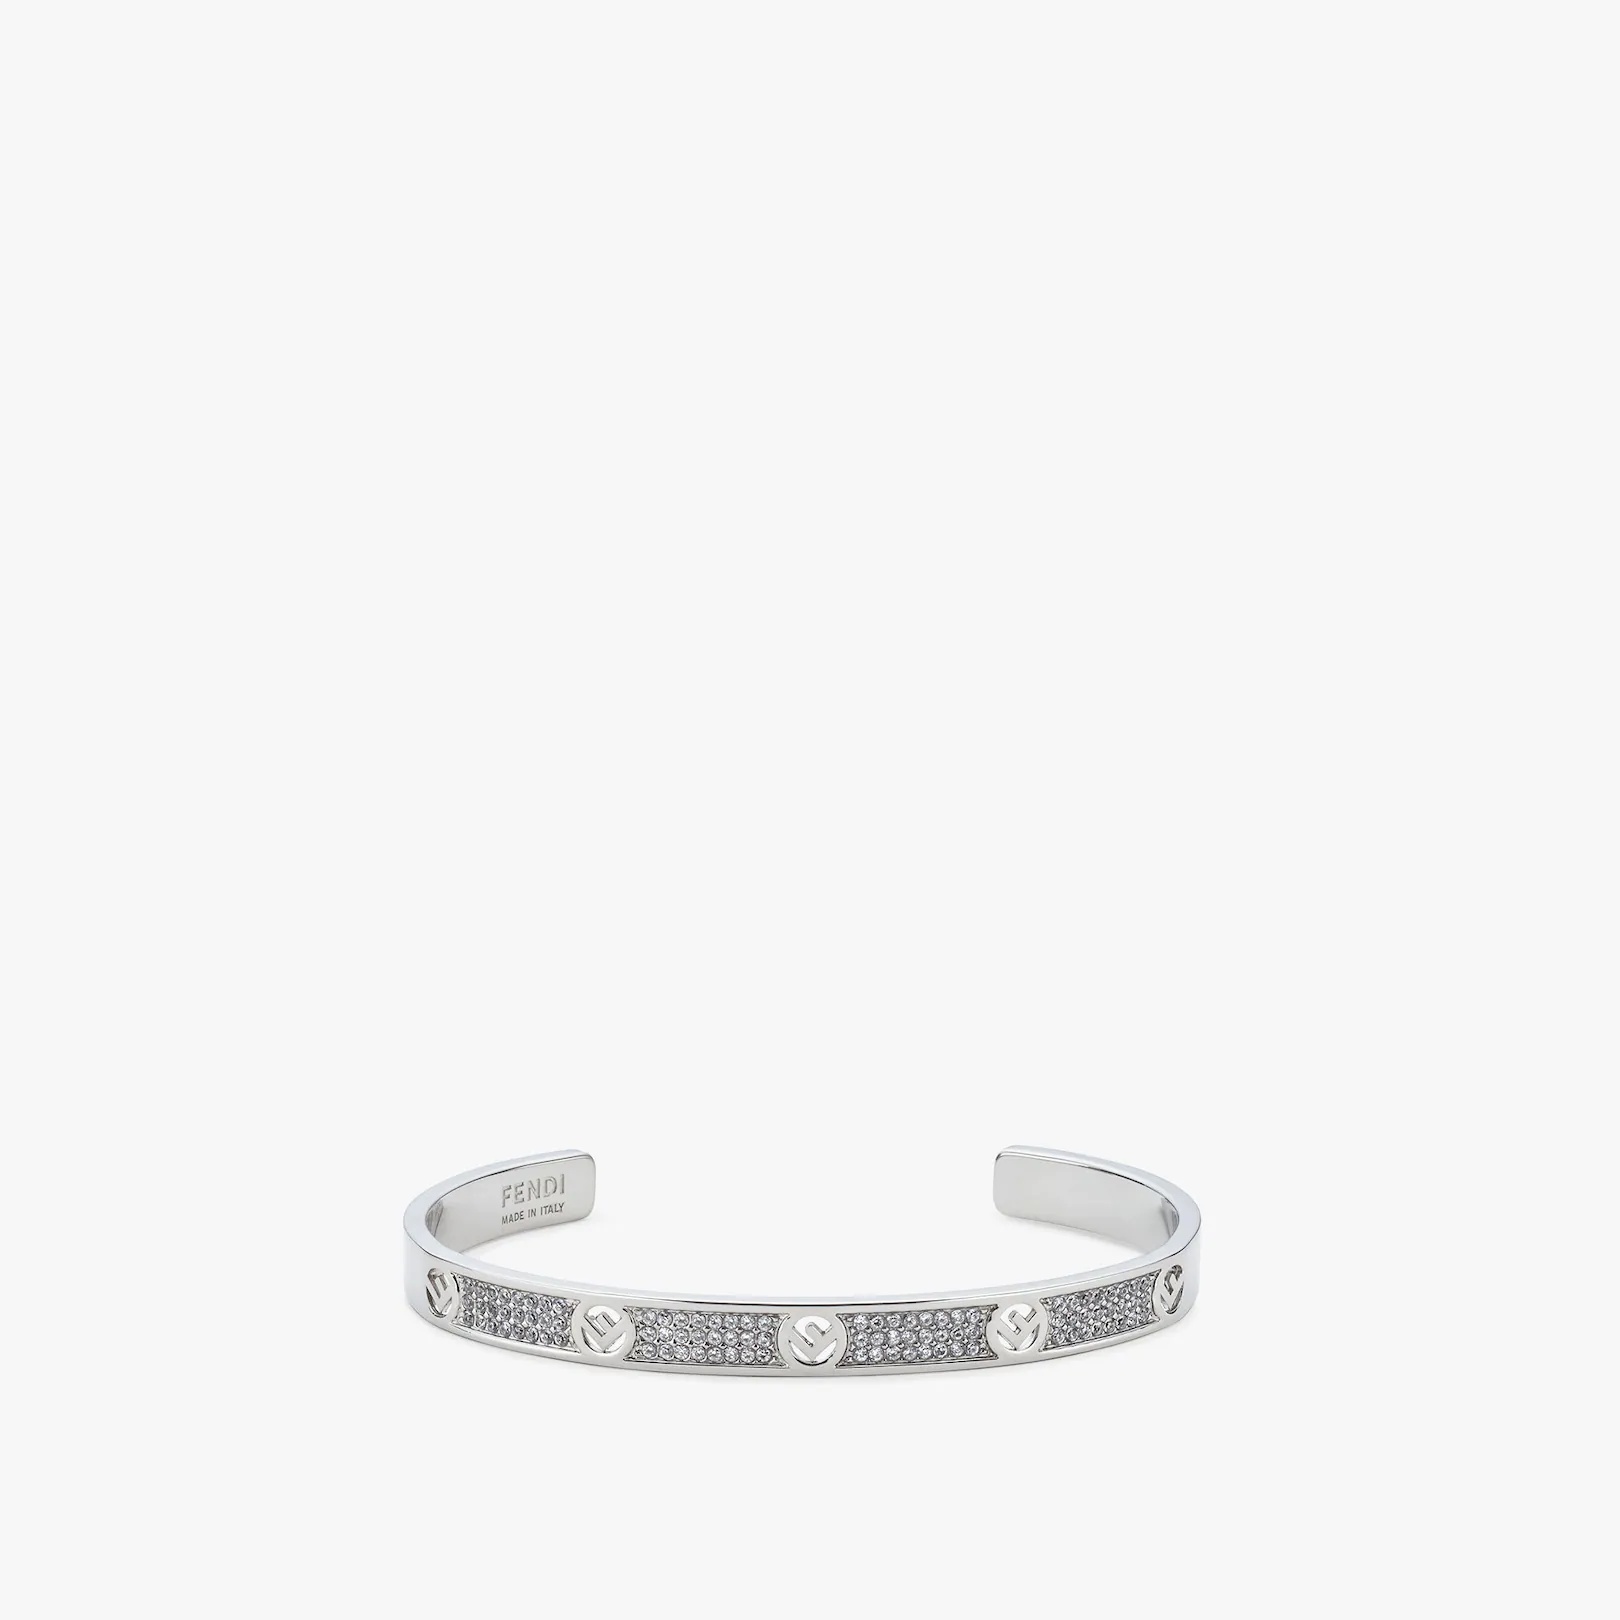 Silver-colored bracelet - 1